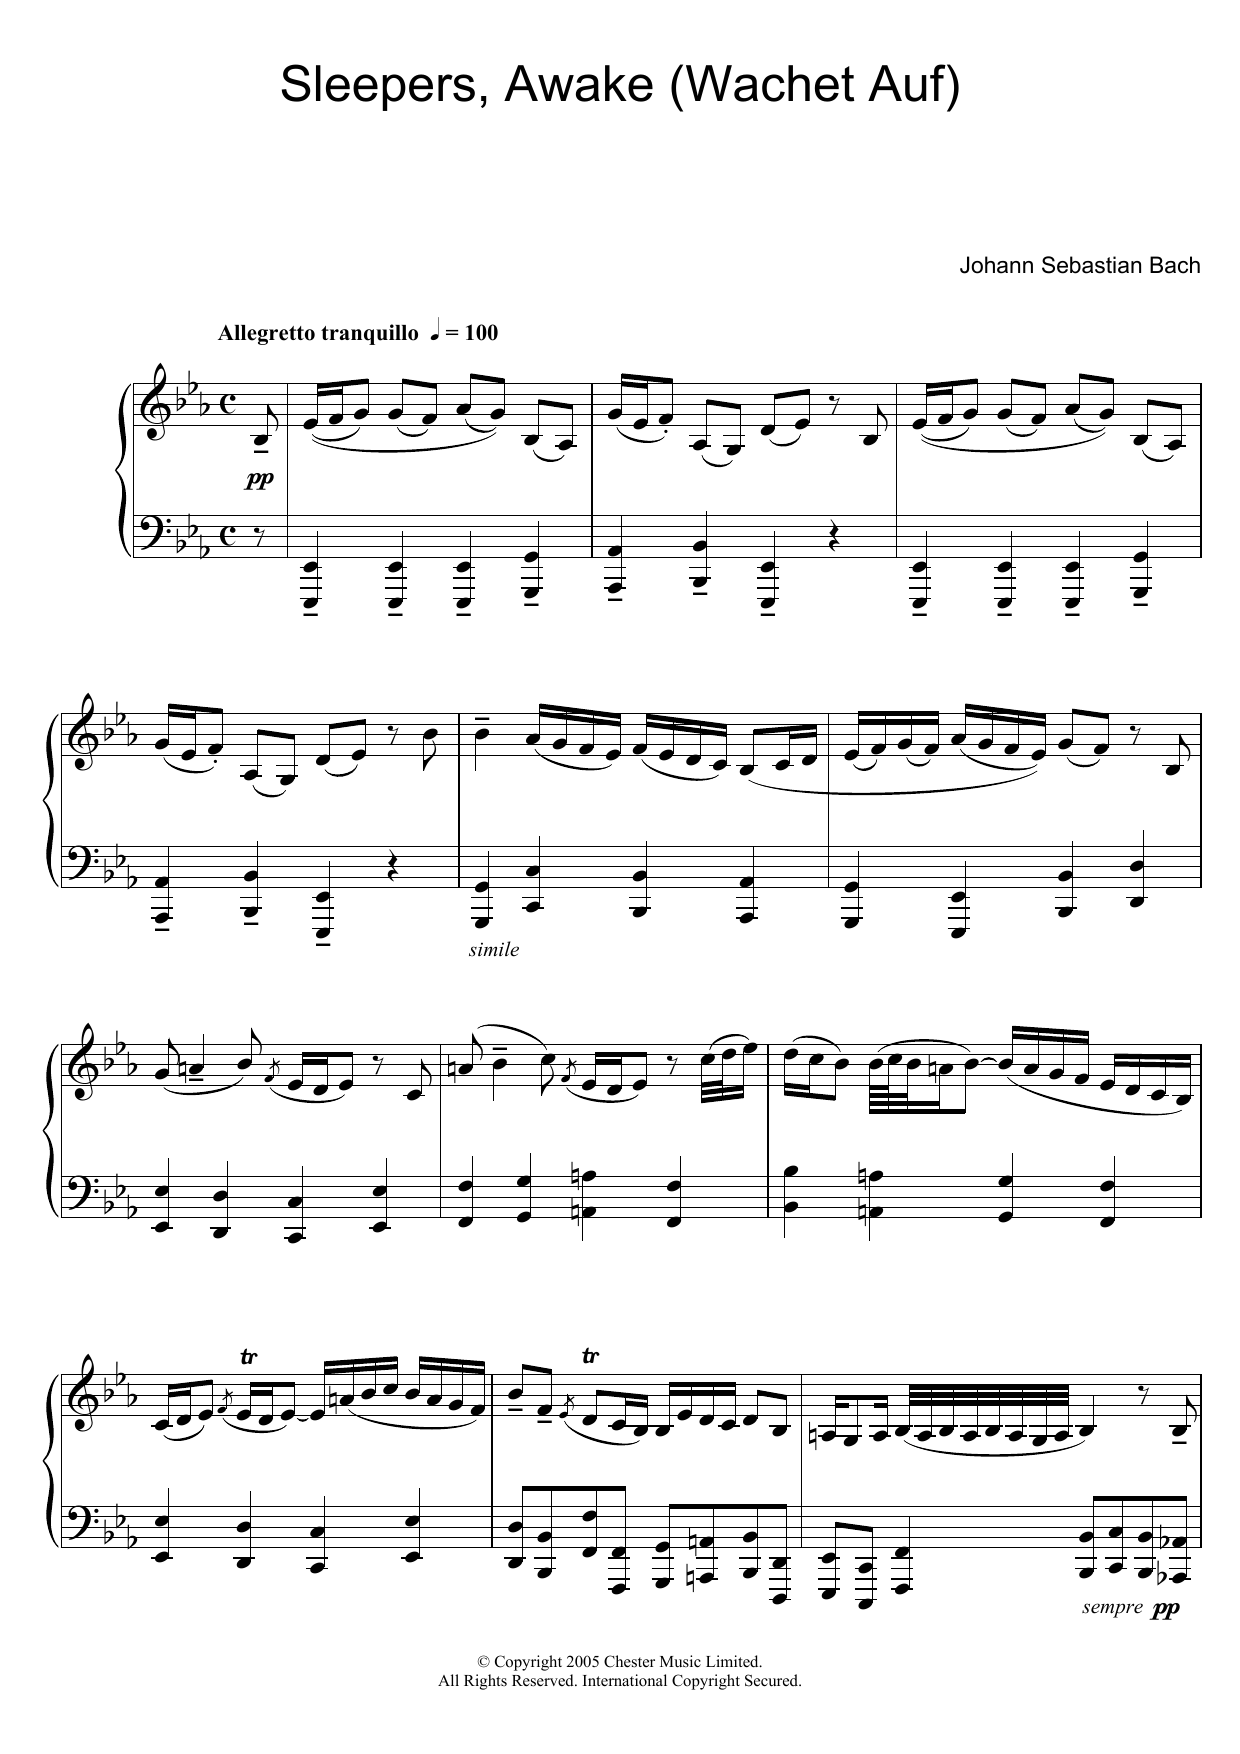 Johann Sebastian Bach Sleepers, Awake (Wachet Auf) Sheet Music Notes & Chords for Trumpet - Download or Print PDF